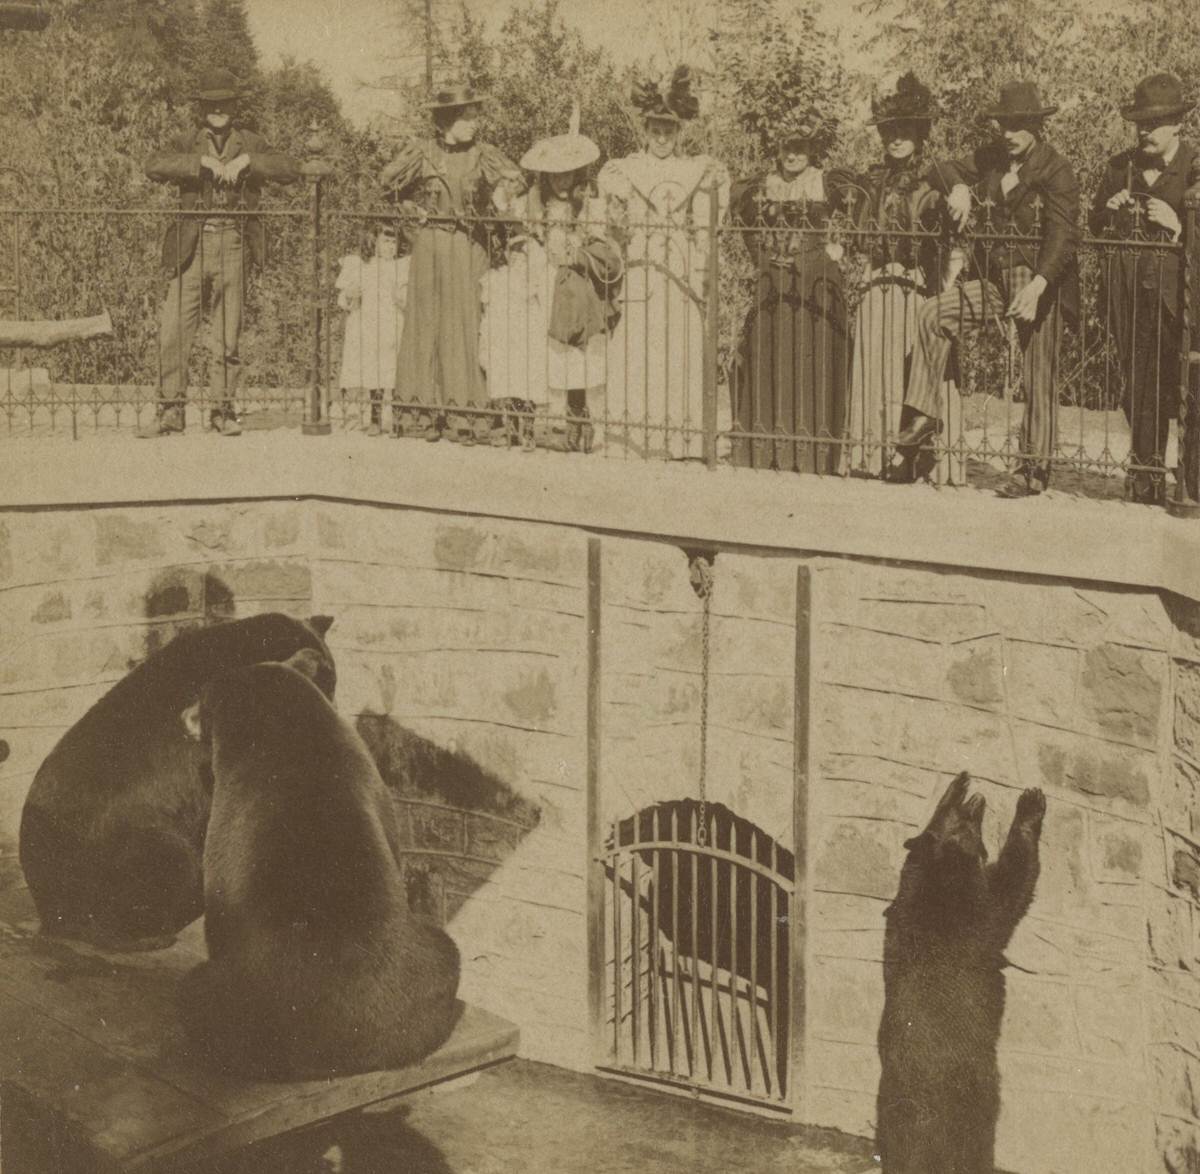 Washington Park Zoo, 1900